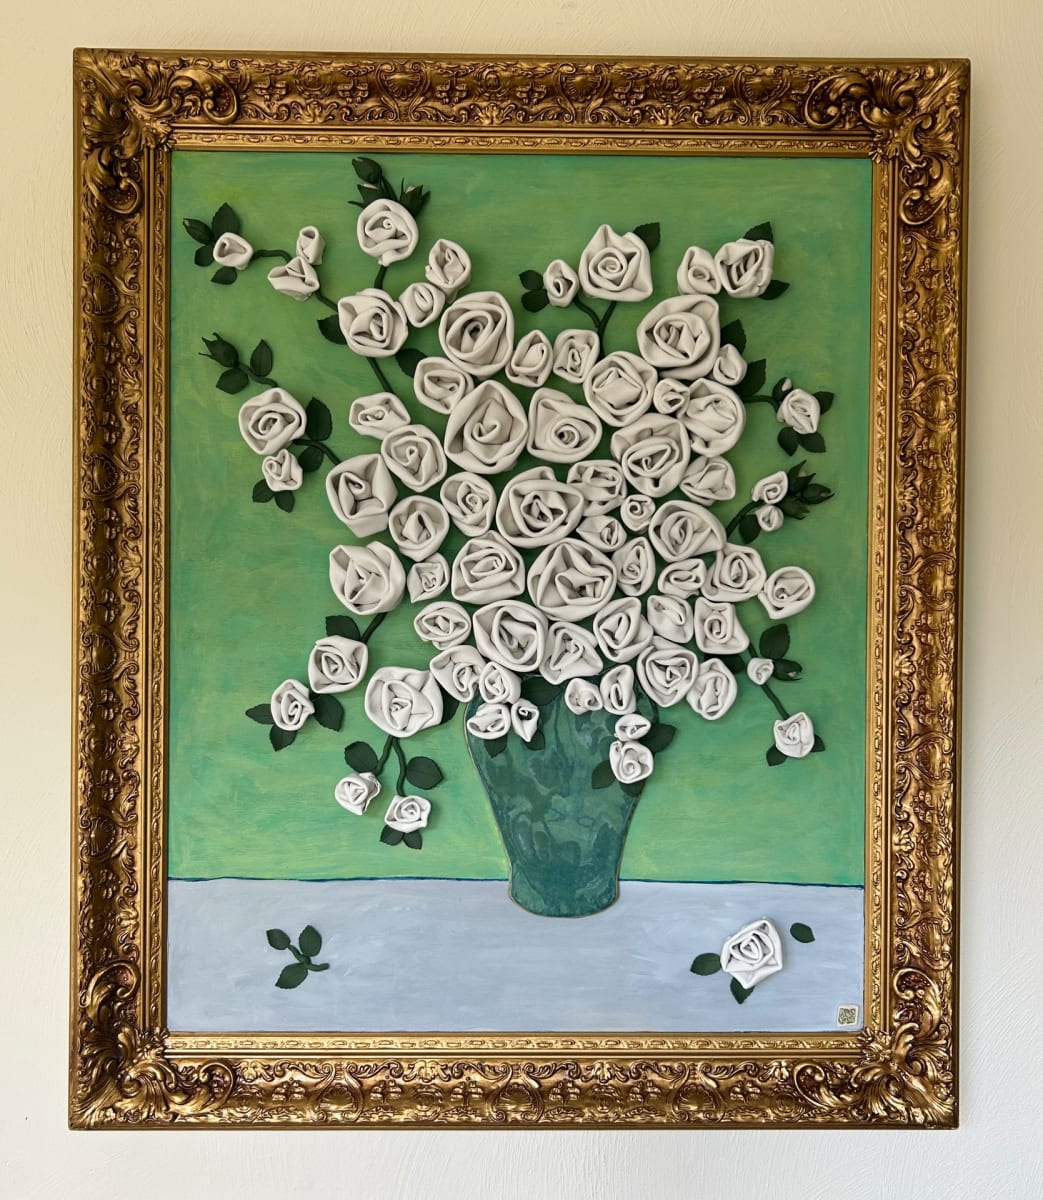 If Van Gogh Painted with Porcelain - Roses by Nicola Cornford 